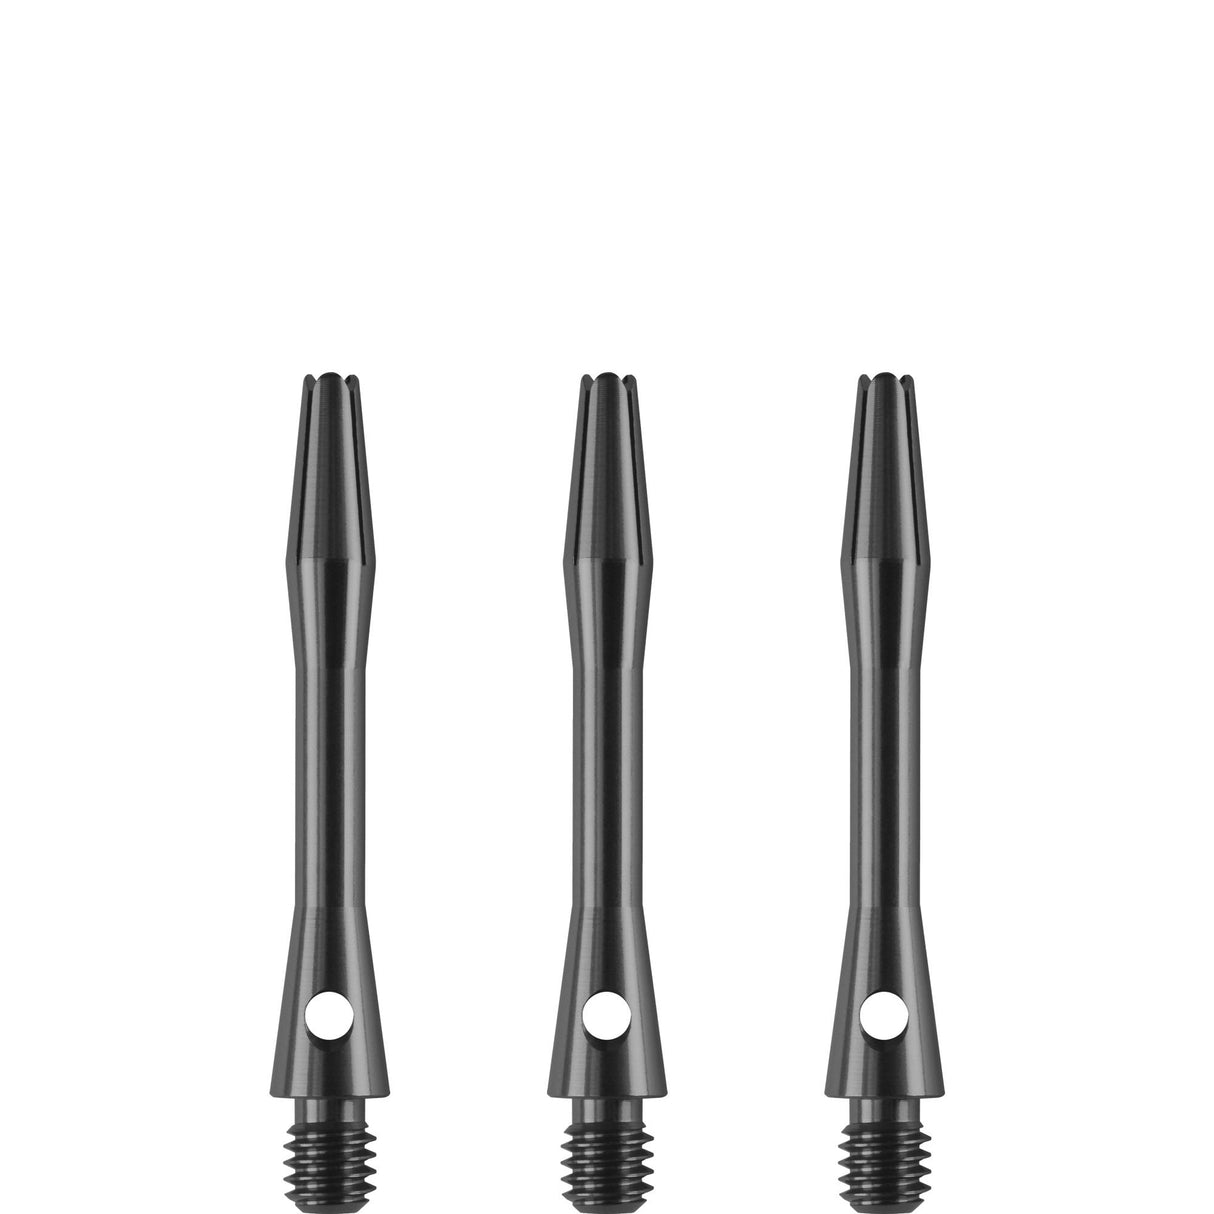 Designa Aluminium Shafts - Metal Dart Stems - Gun Metal Short